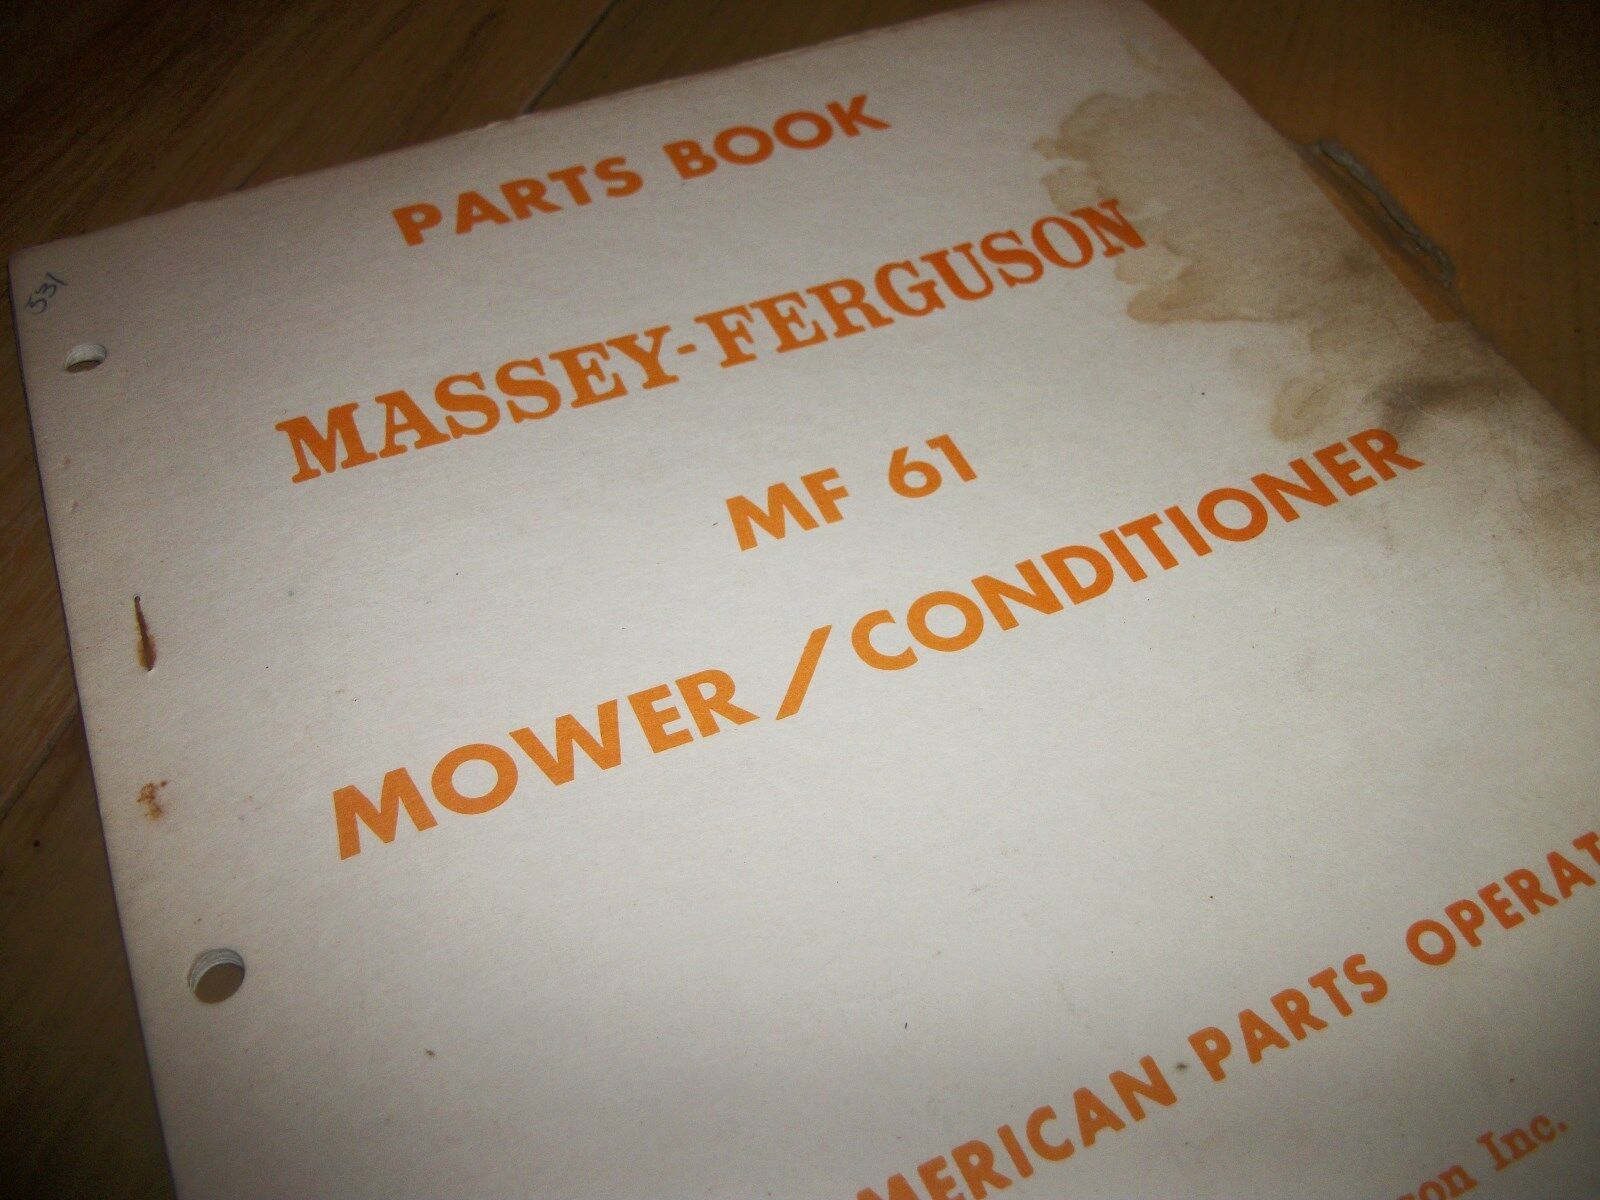 Massey-Ferguson MF61. mower/ conditioner PARTS BOOK 1st.print 1967.